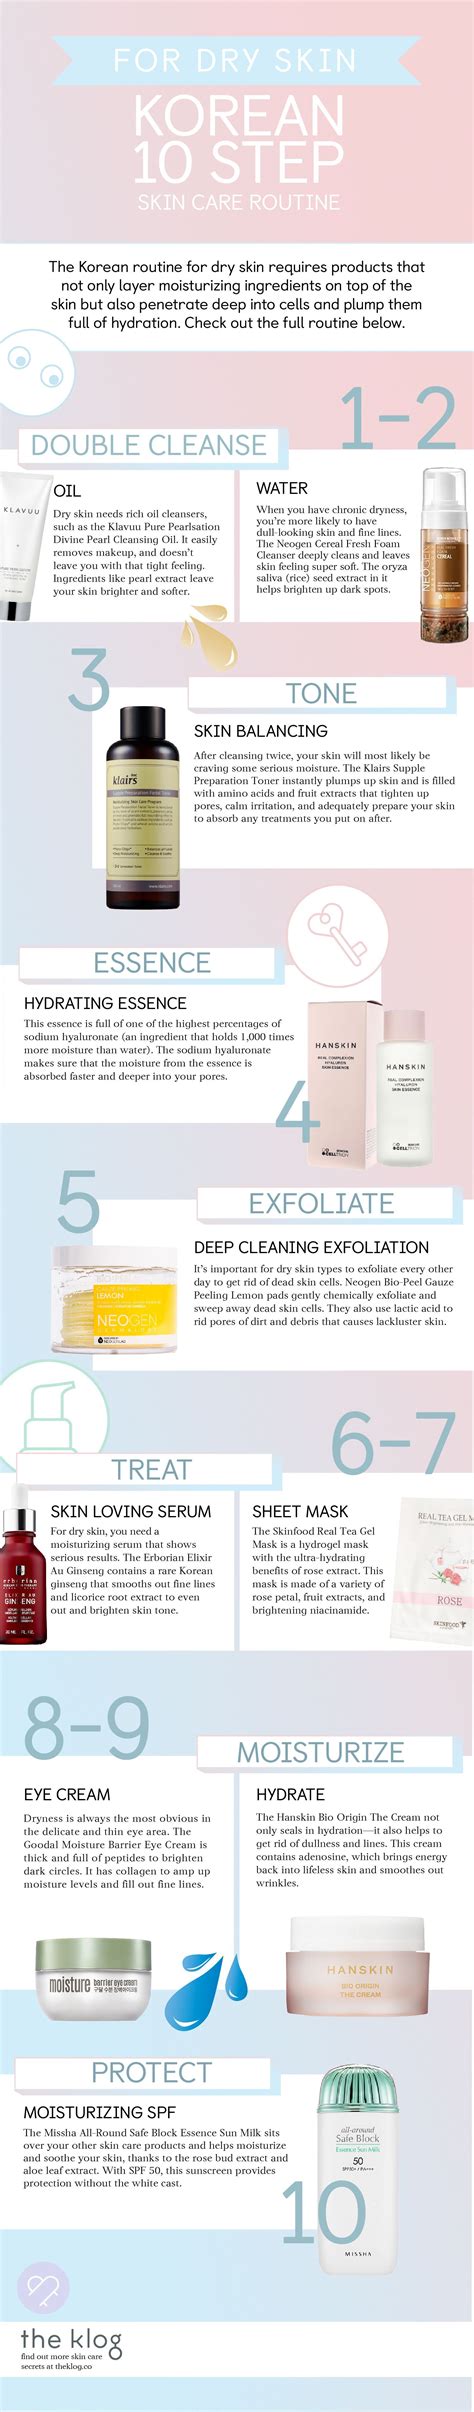 Korean Routine For Dry Skin Skin Care Skin Care Routine Natural